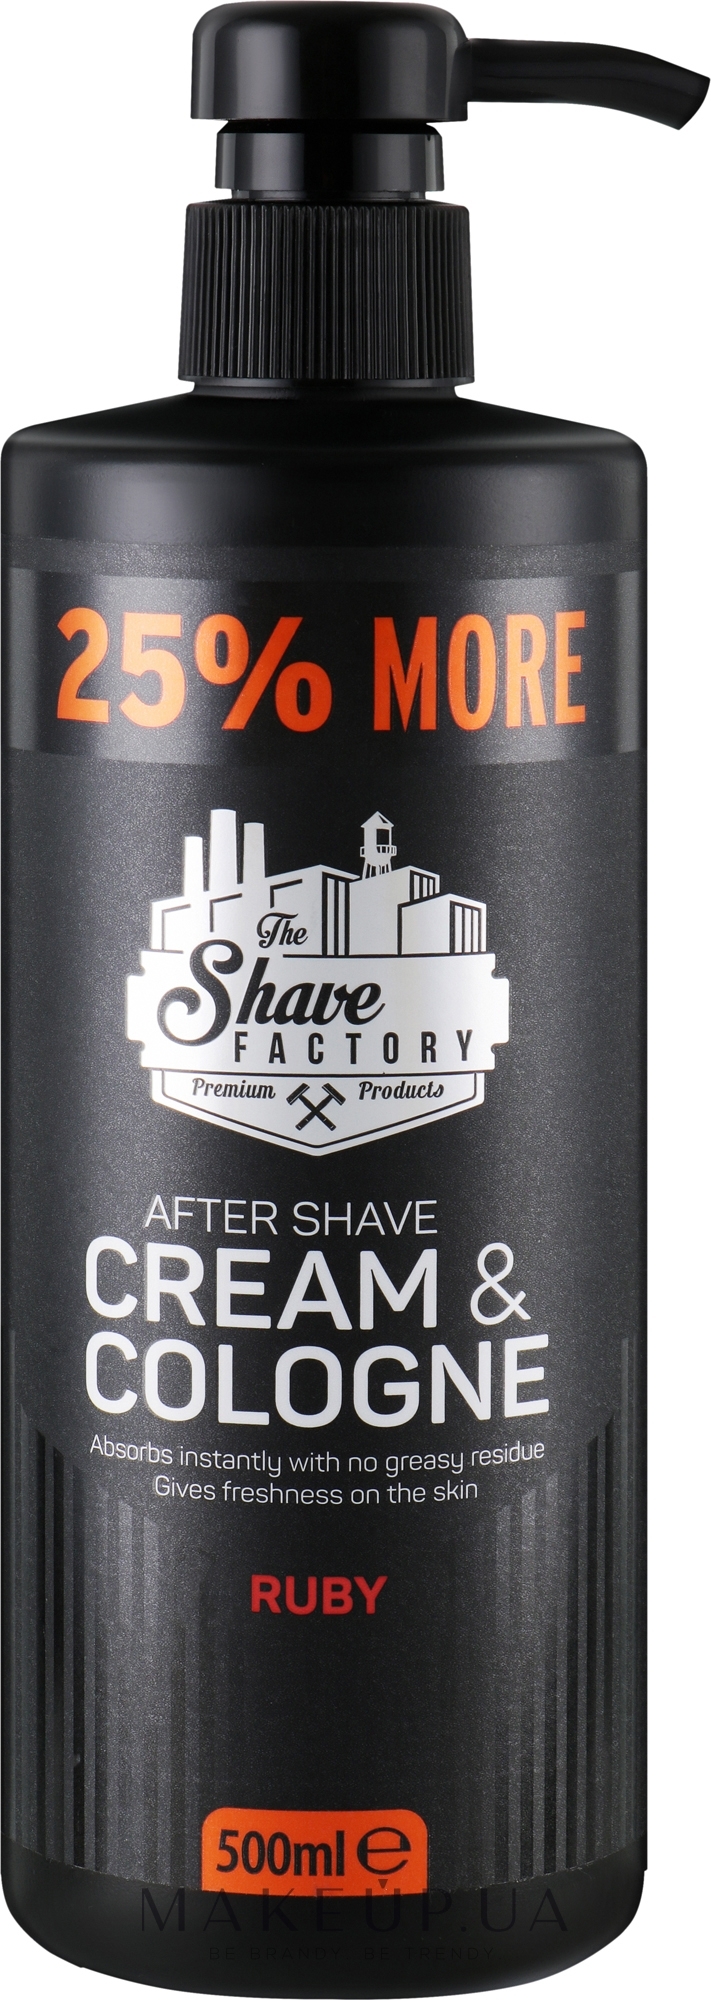 Крем-одеколон после бритья - The Shave Factory Cream & Cologne Ruby — фото 500ml